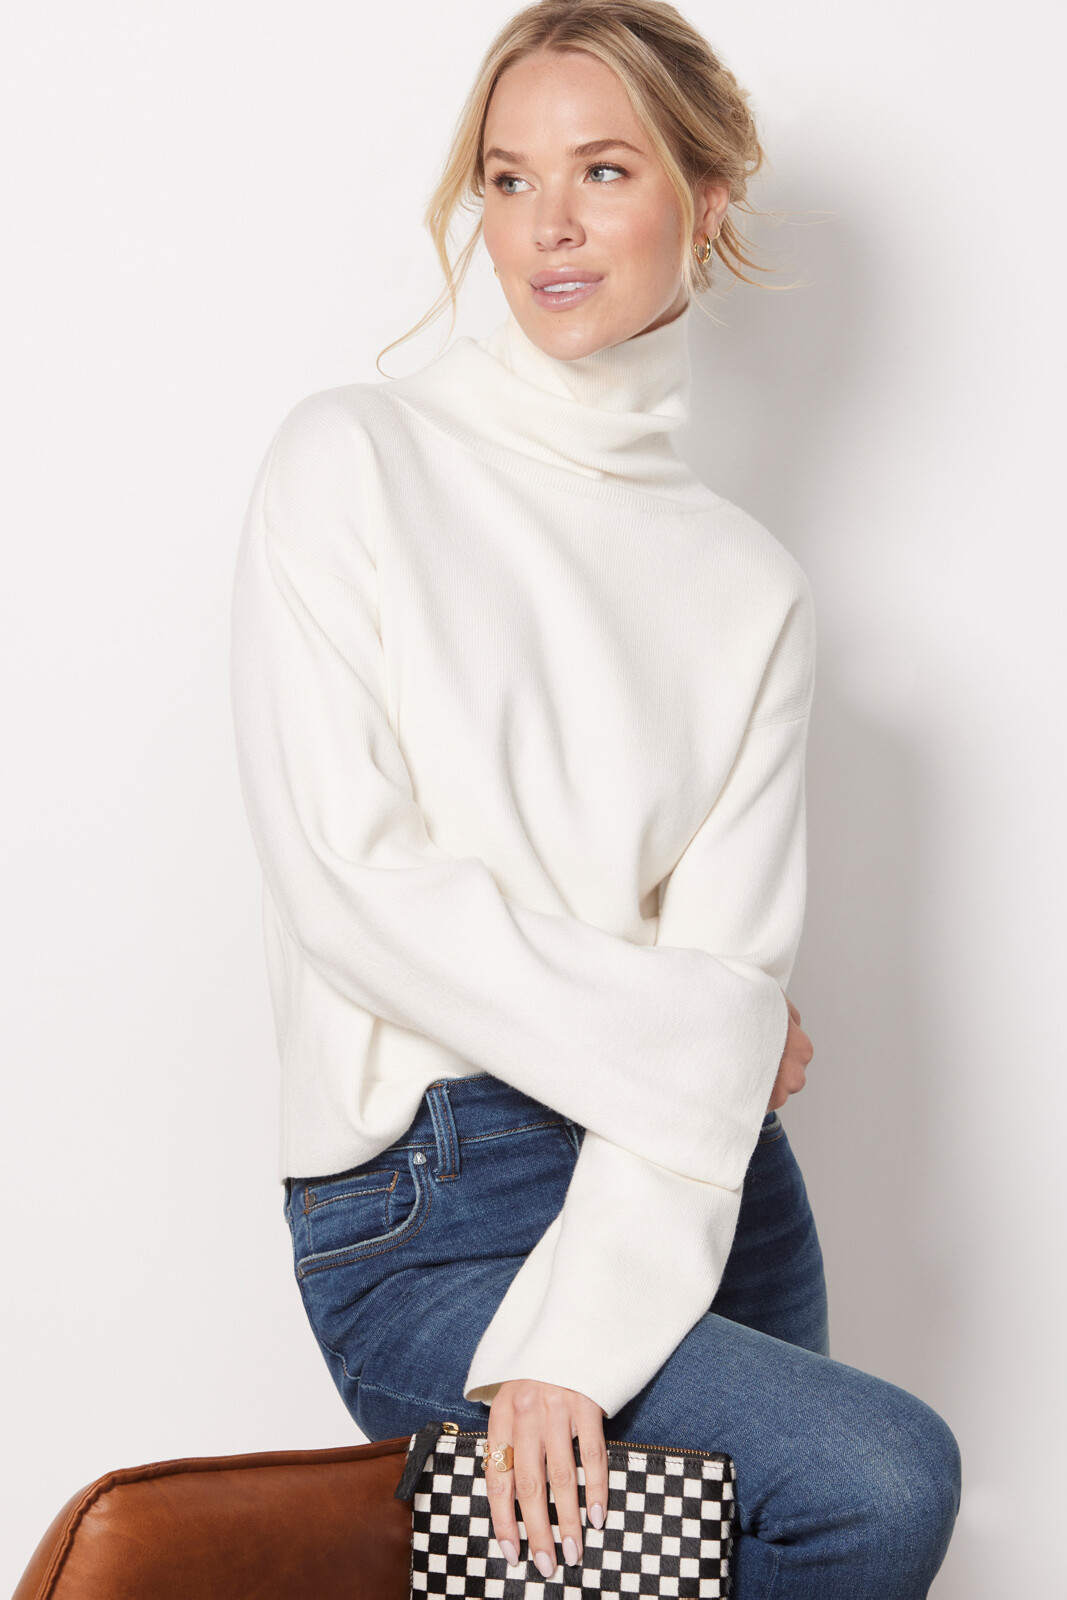 Women's Mock Turtleneck Cashmere-Like Pullover Sweater - Universal Thread™  Dark Gray XS